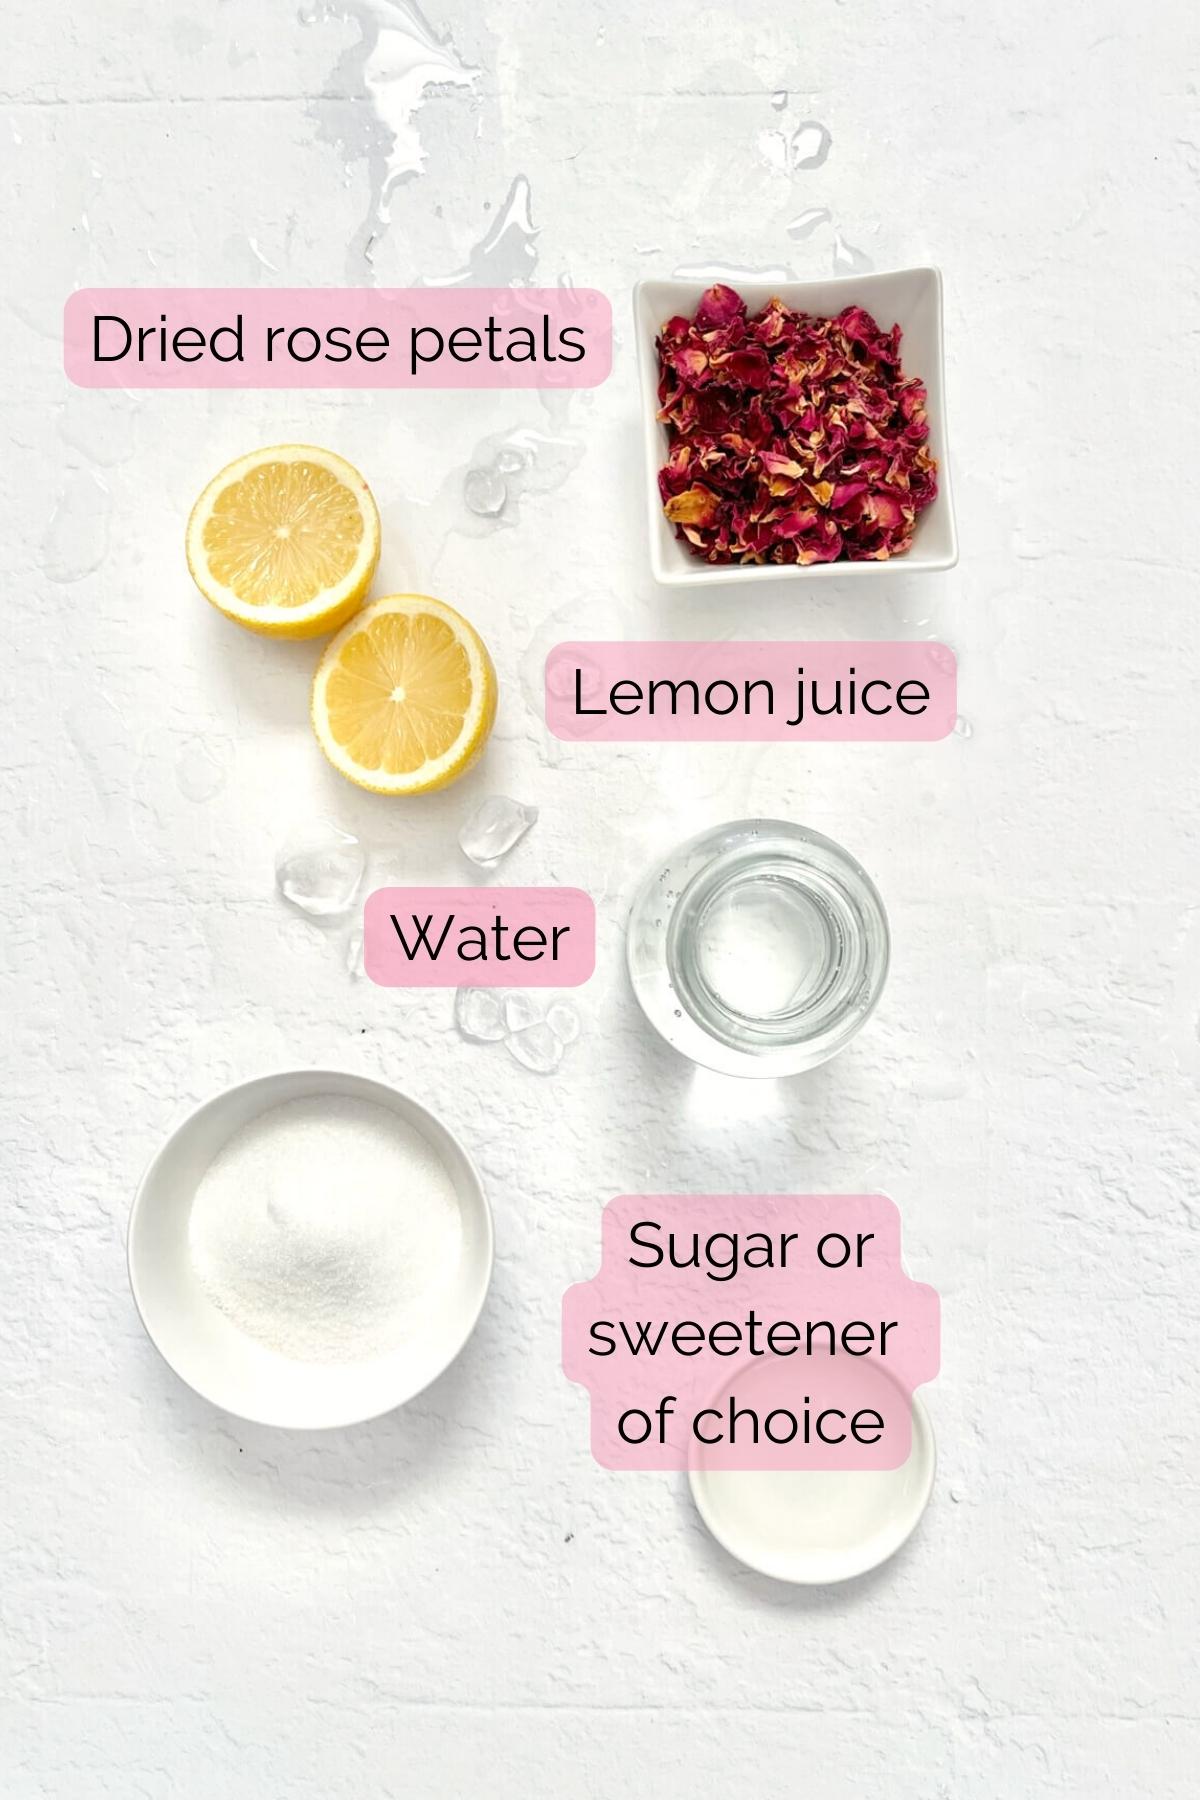 image of ingredients for rose lemonade including dried rose petals, lemon, water and sugar.